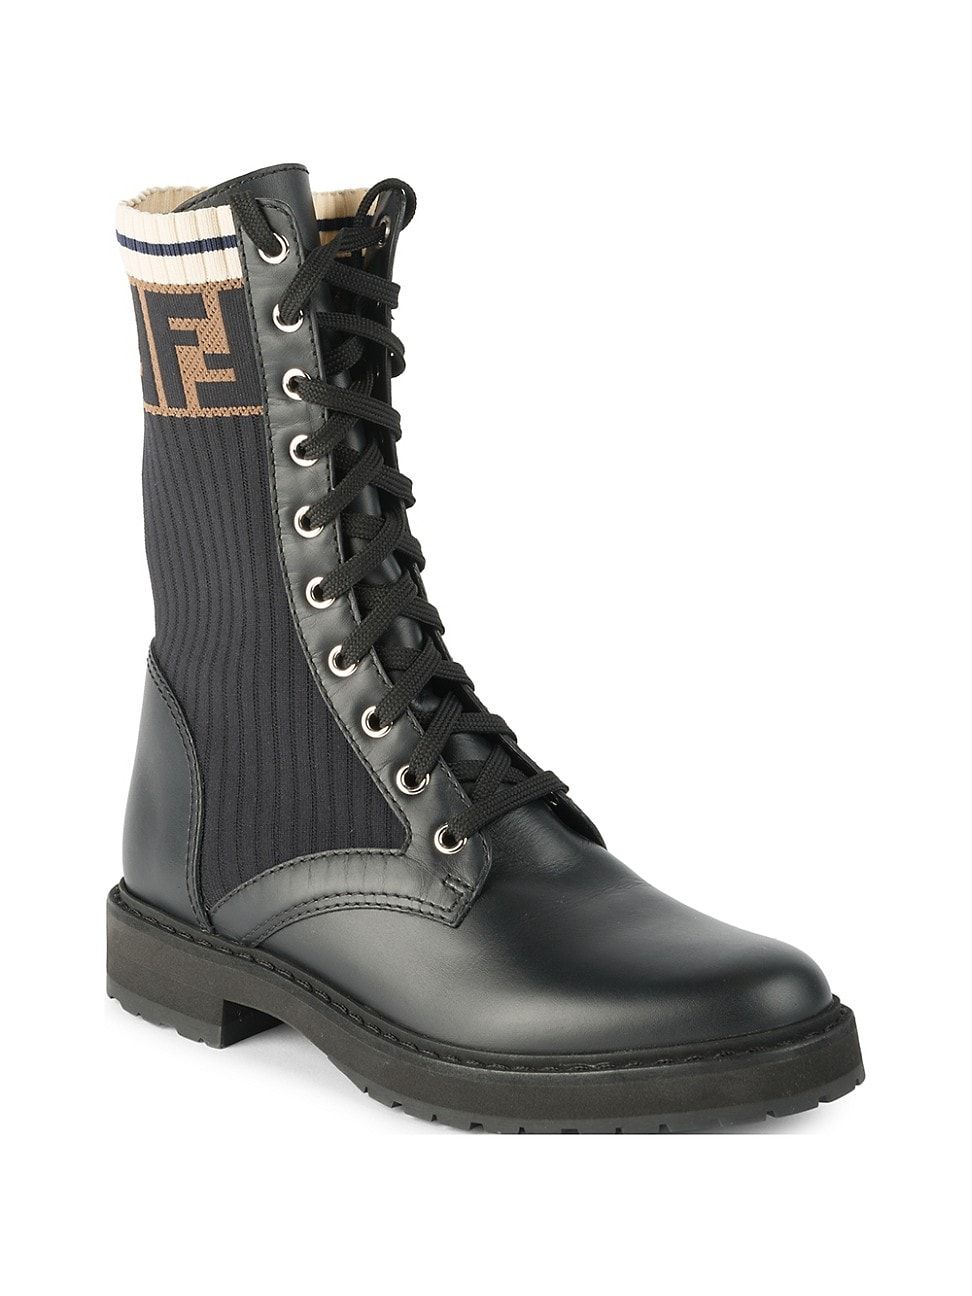 Fendi Women's Rockoko Knit Leather Combat Boots - Black - Size 38 (8) | Saks Fifth Avenue